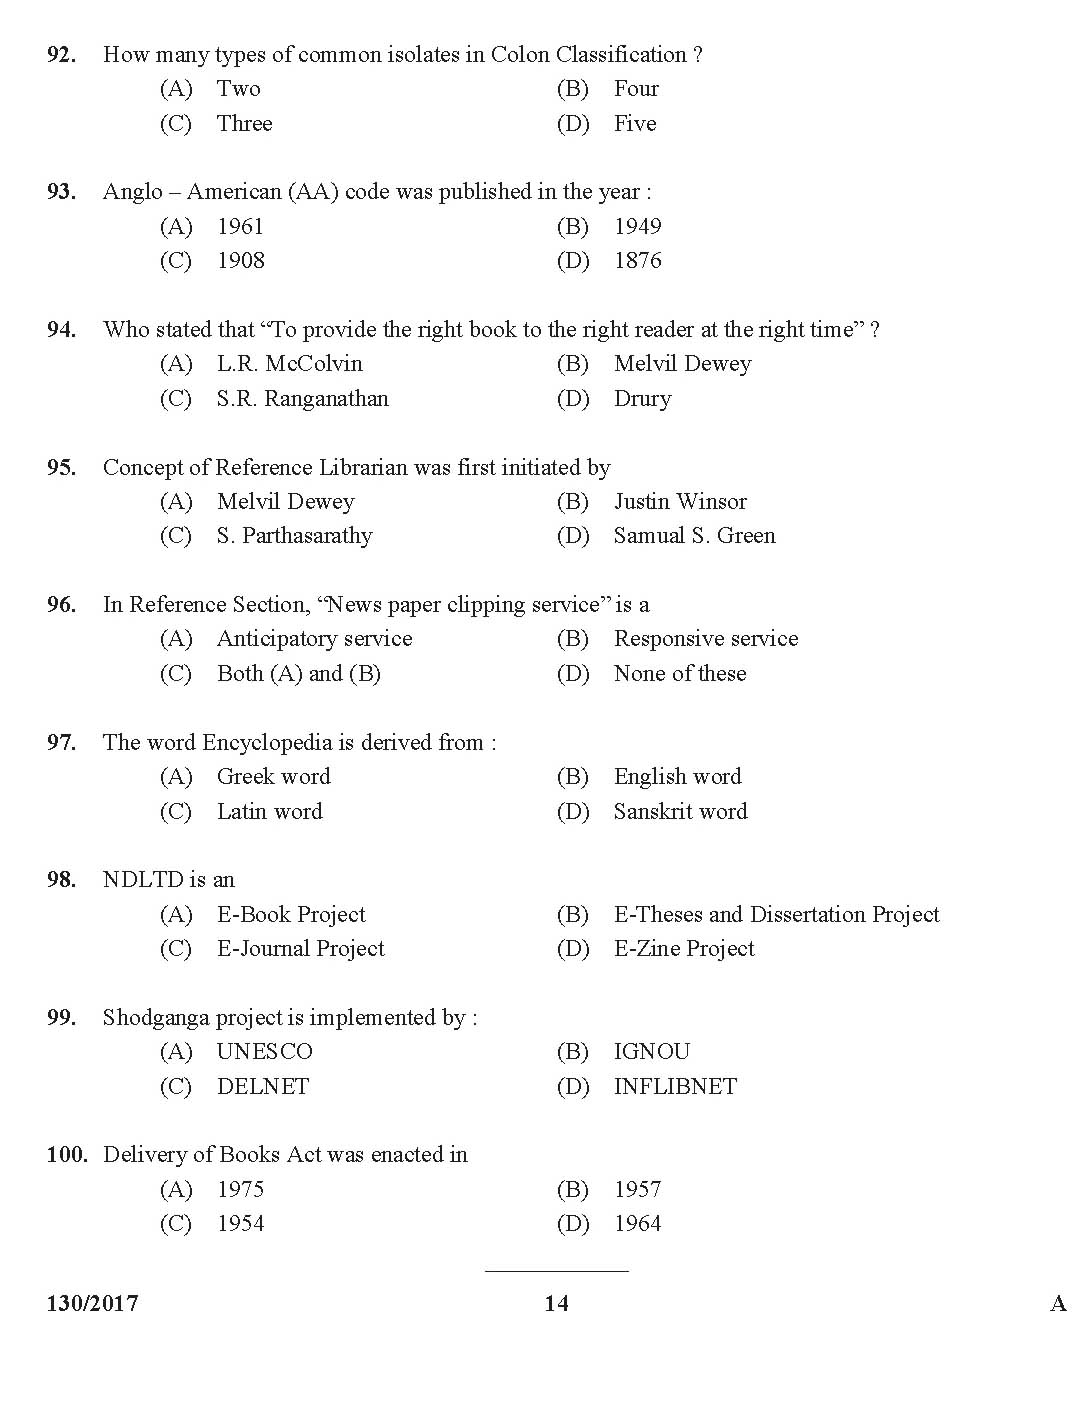 Kerala PSC Librarian Grade IV Exam Question Code 1302017 13